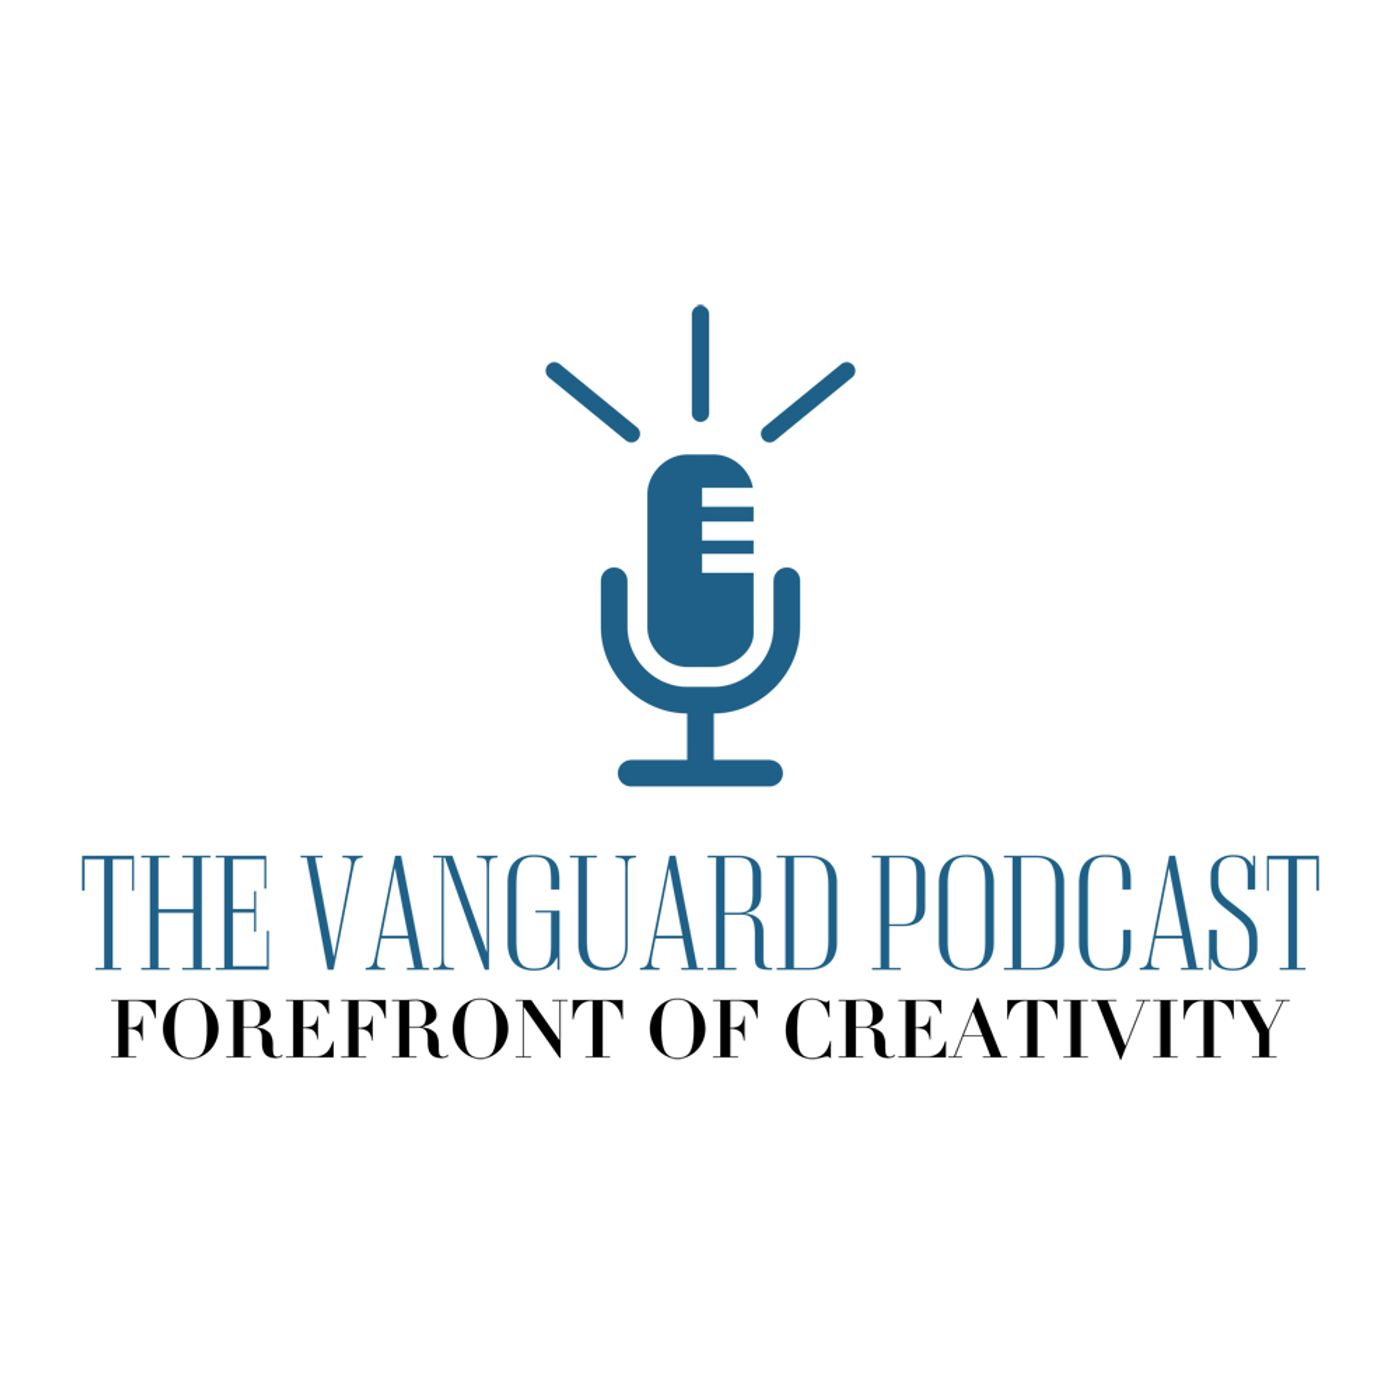 The Vanguard Podcast